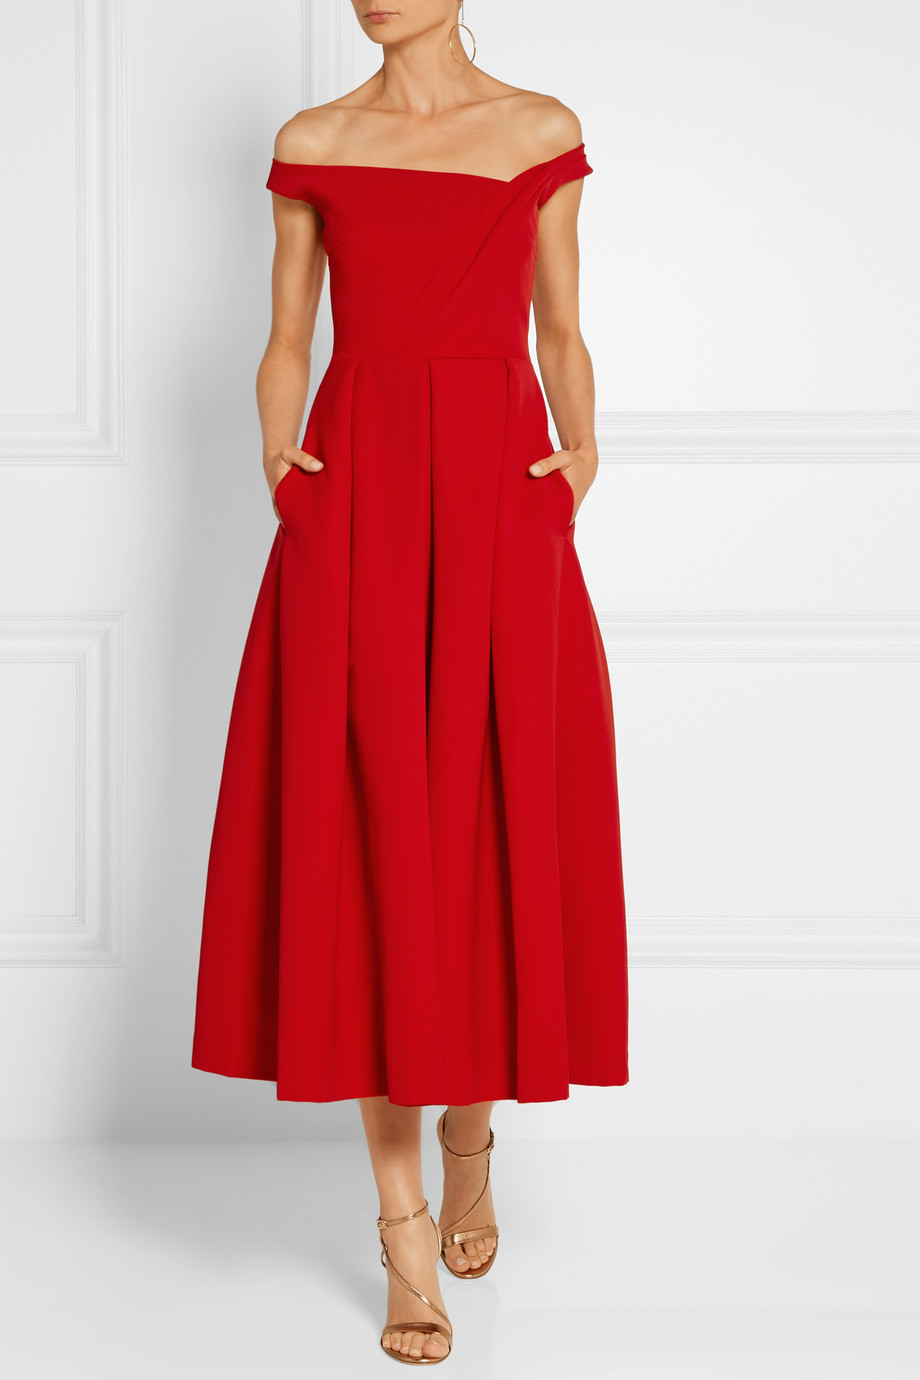 Kate Middleton Preen Dress in Red